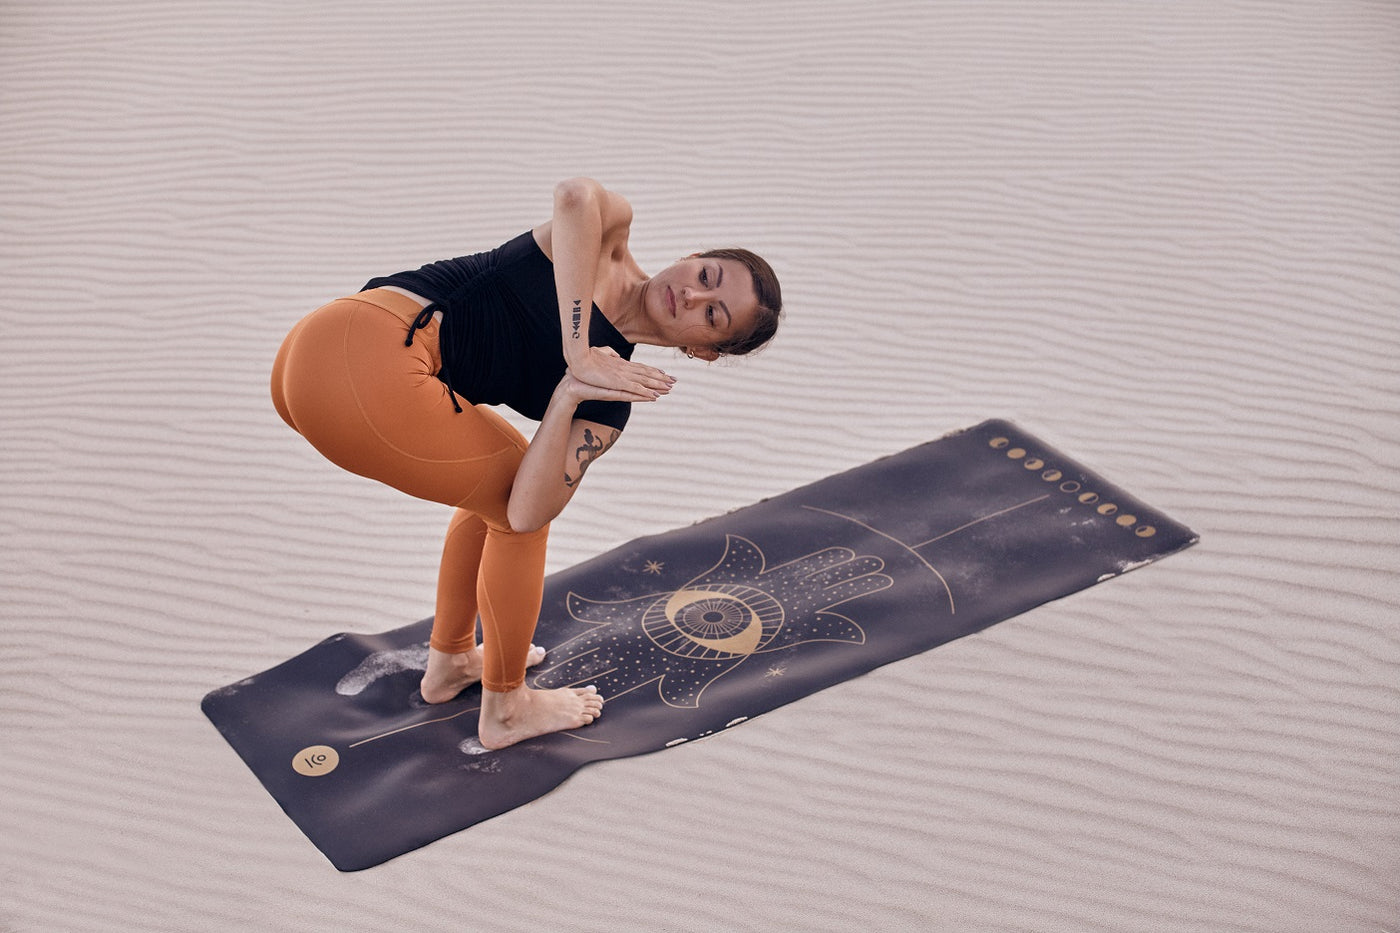 Yoga mat PRO STICKY ILLUMINATION - natural rubber, non-slip, eco-friendly professional gym, pilates and yoga mat